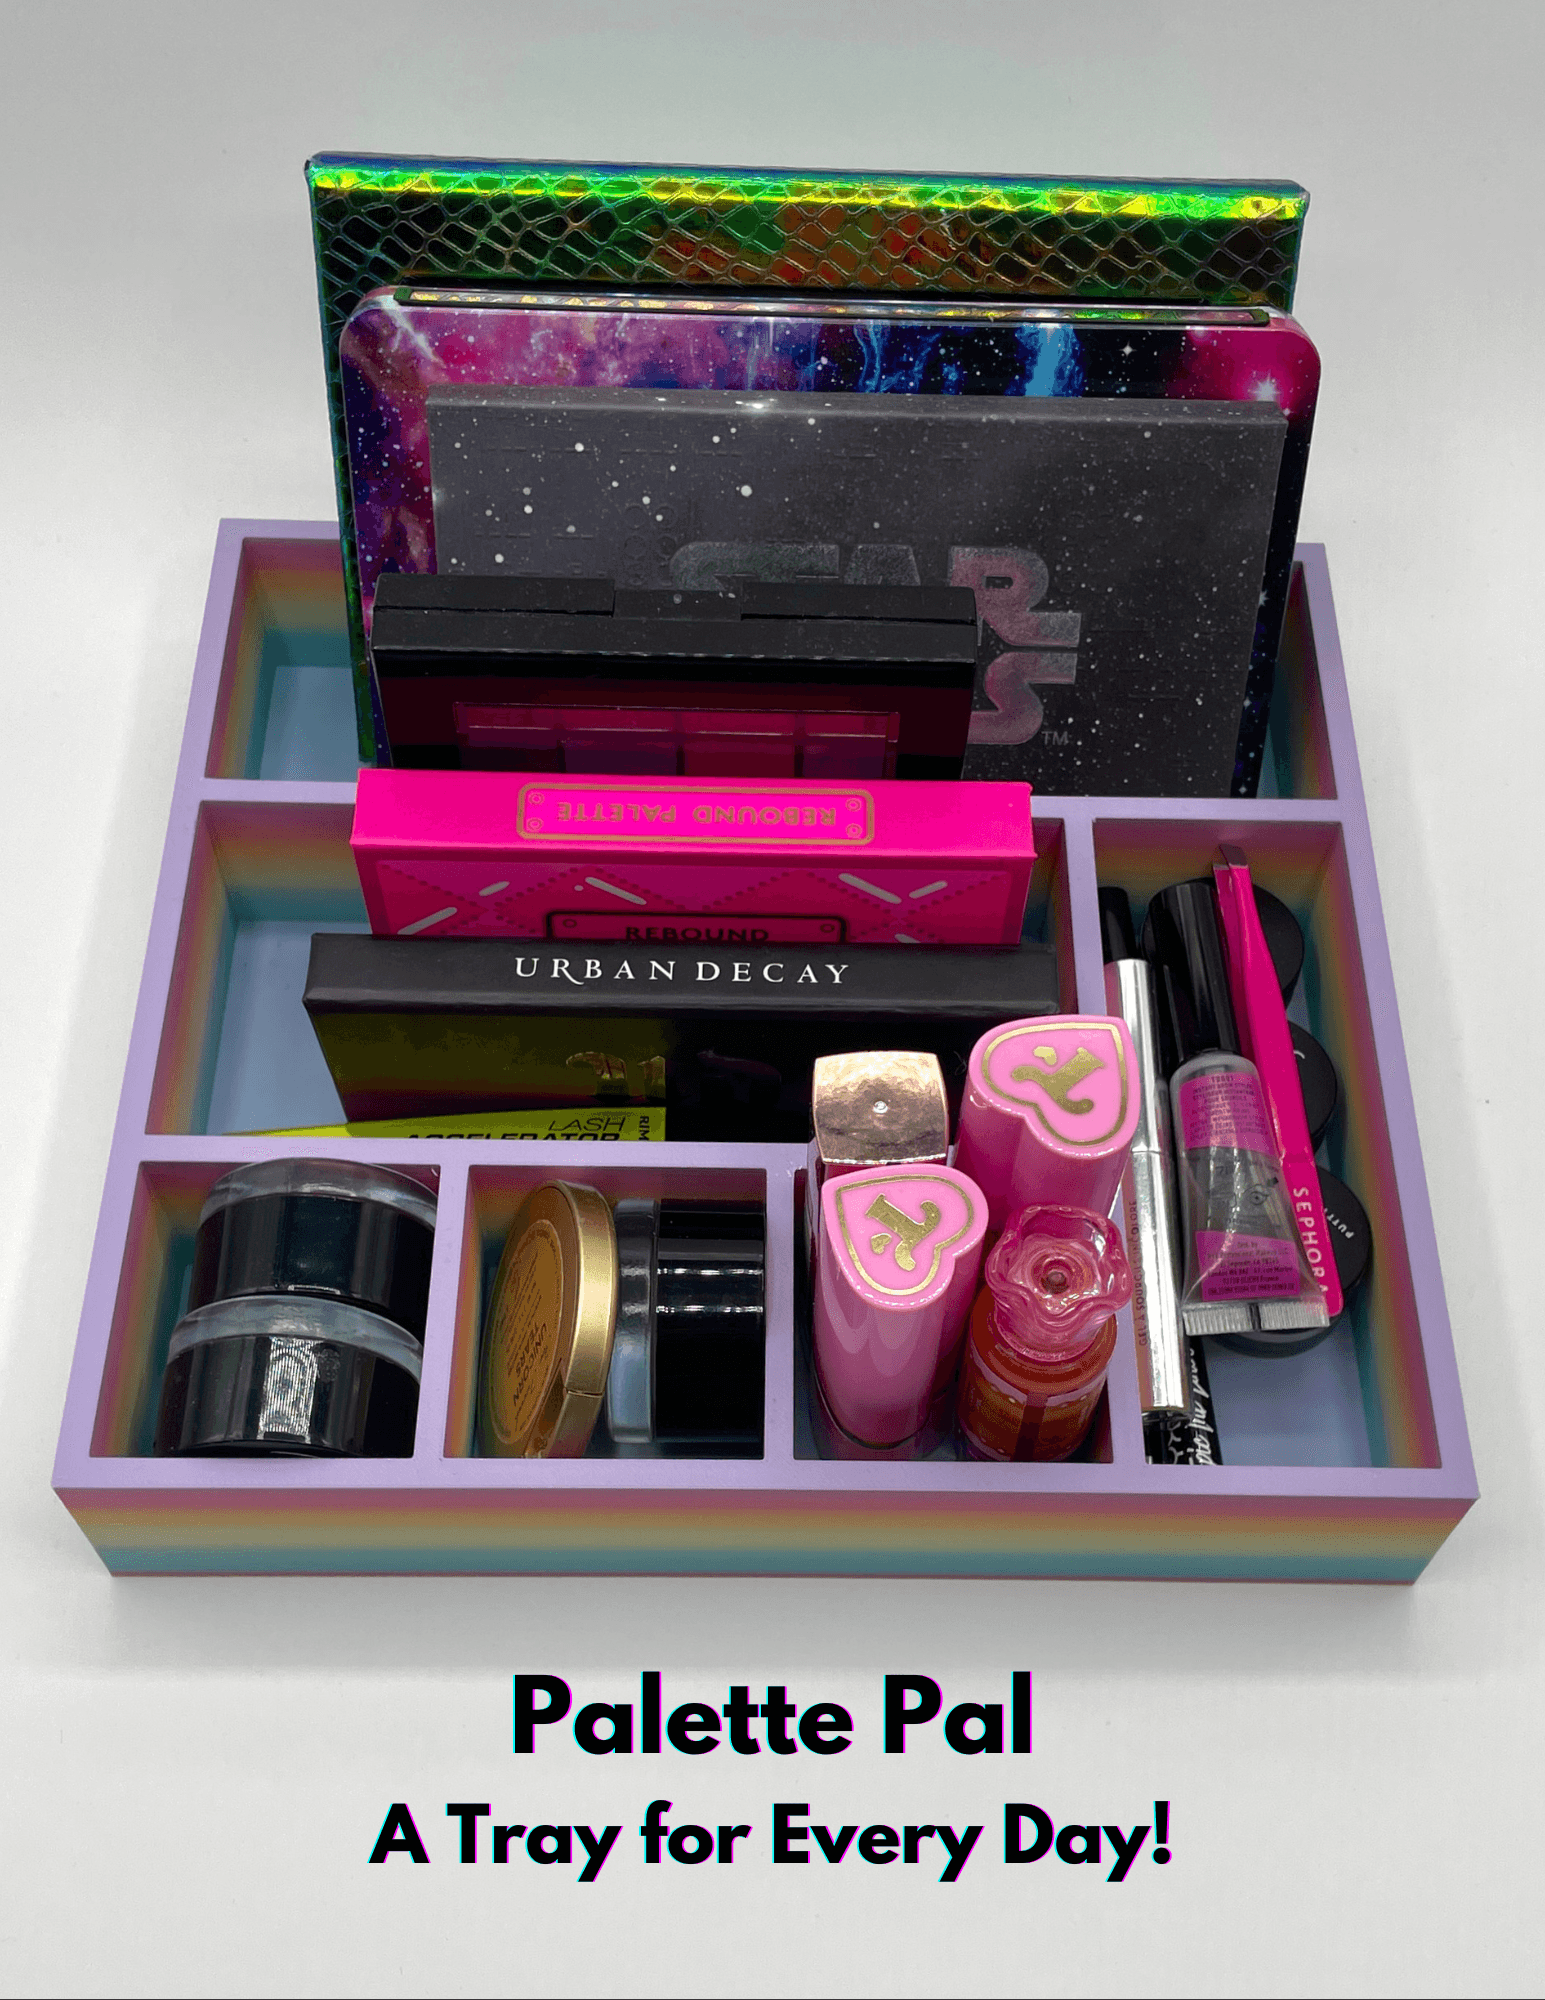 The "Palette Pal" Makeup Organizer Tray